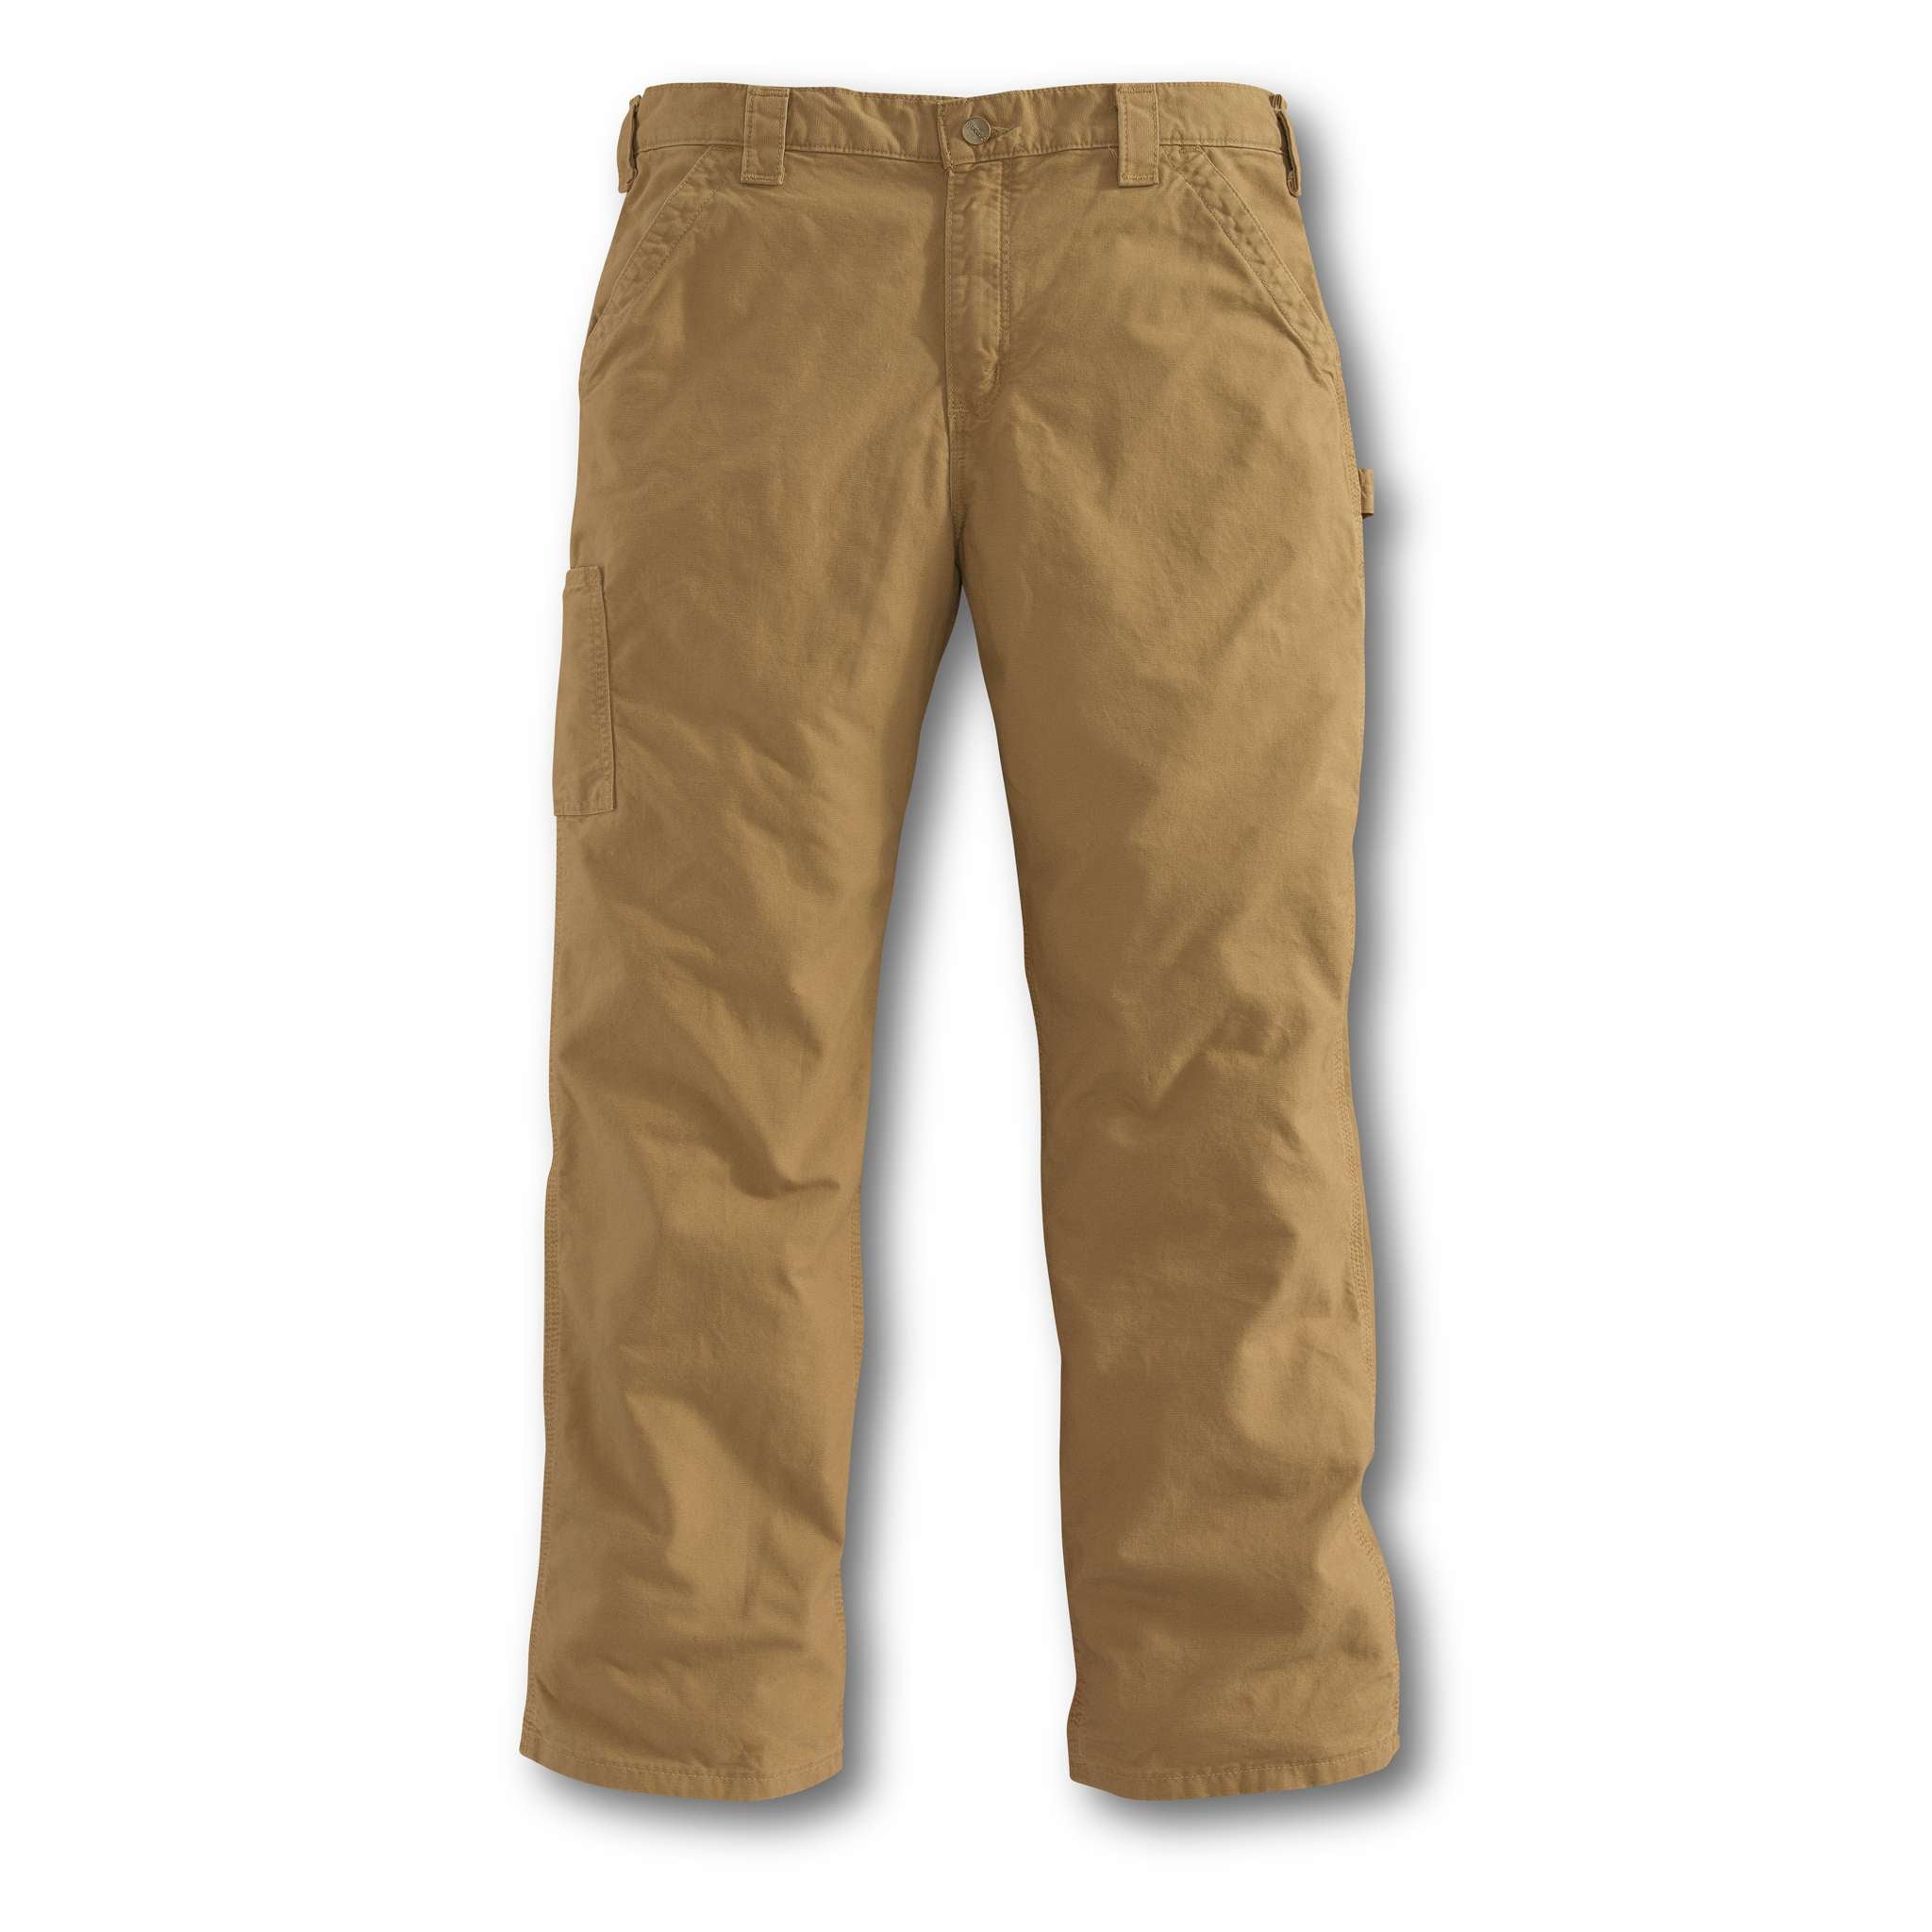 Carhartt Mens Pants Size 48x30 B151-DKH Khaki Tan Color Carpenter Pant